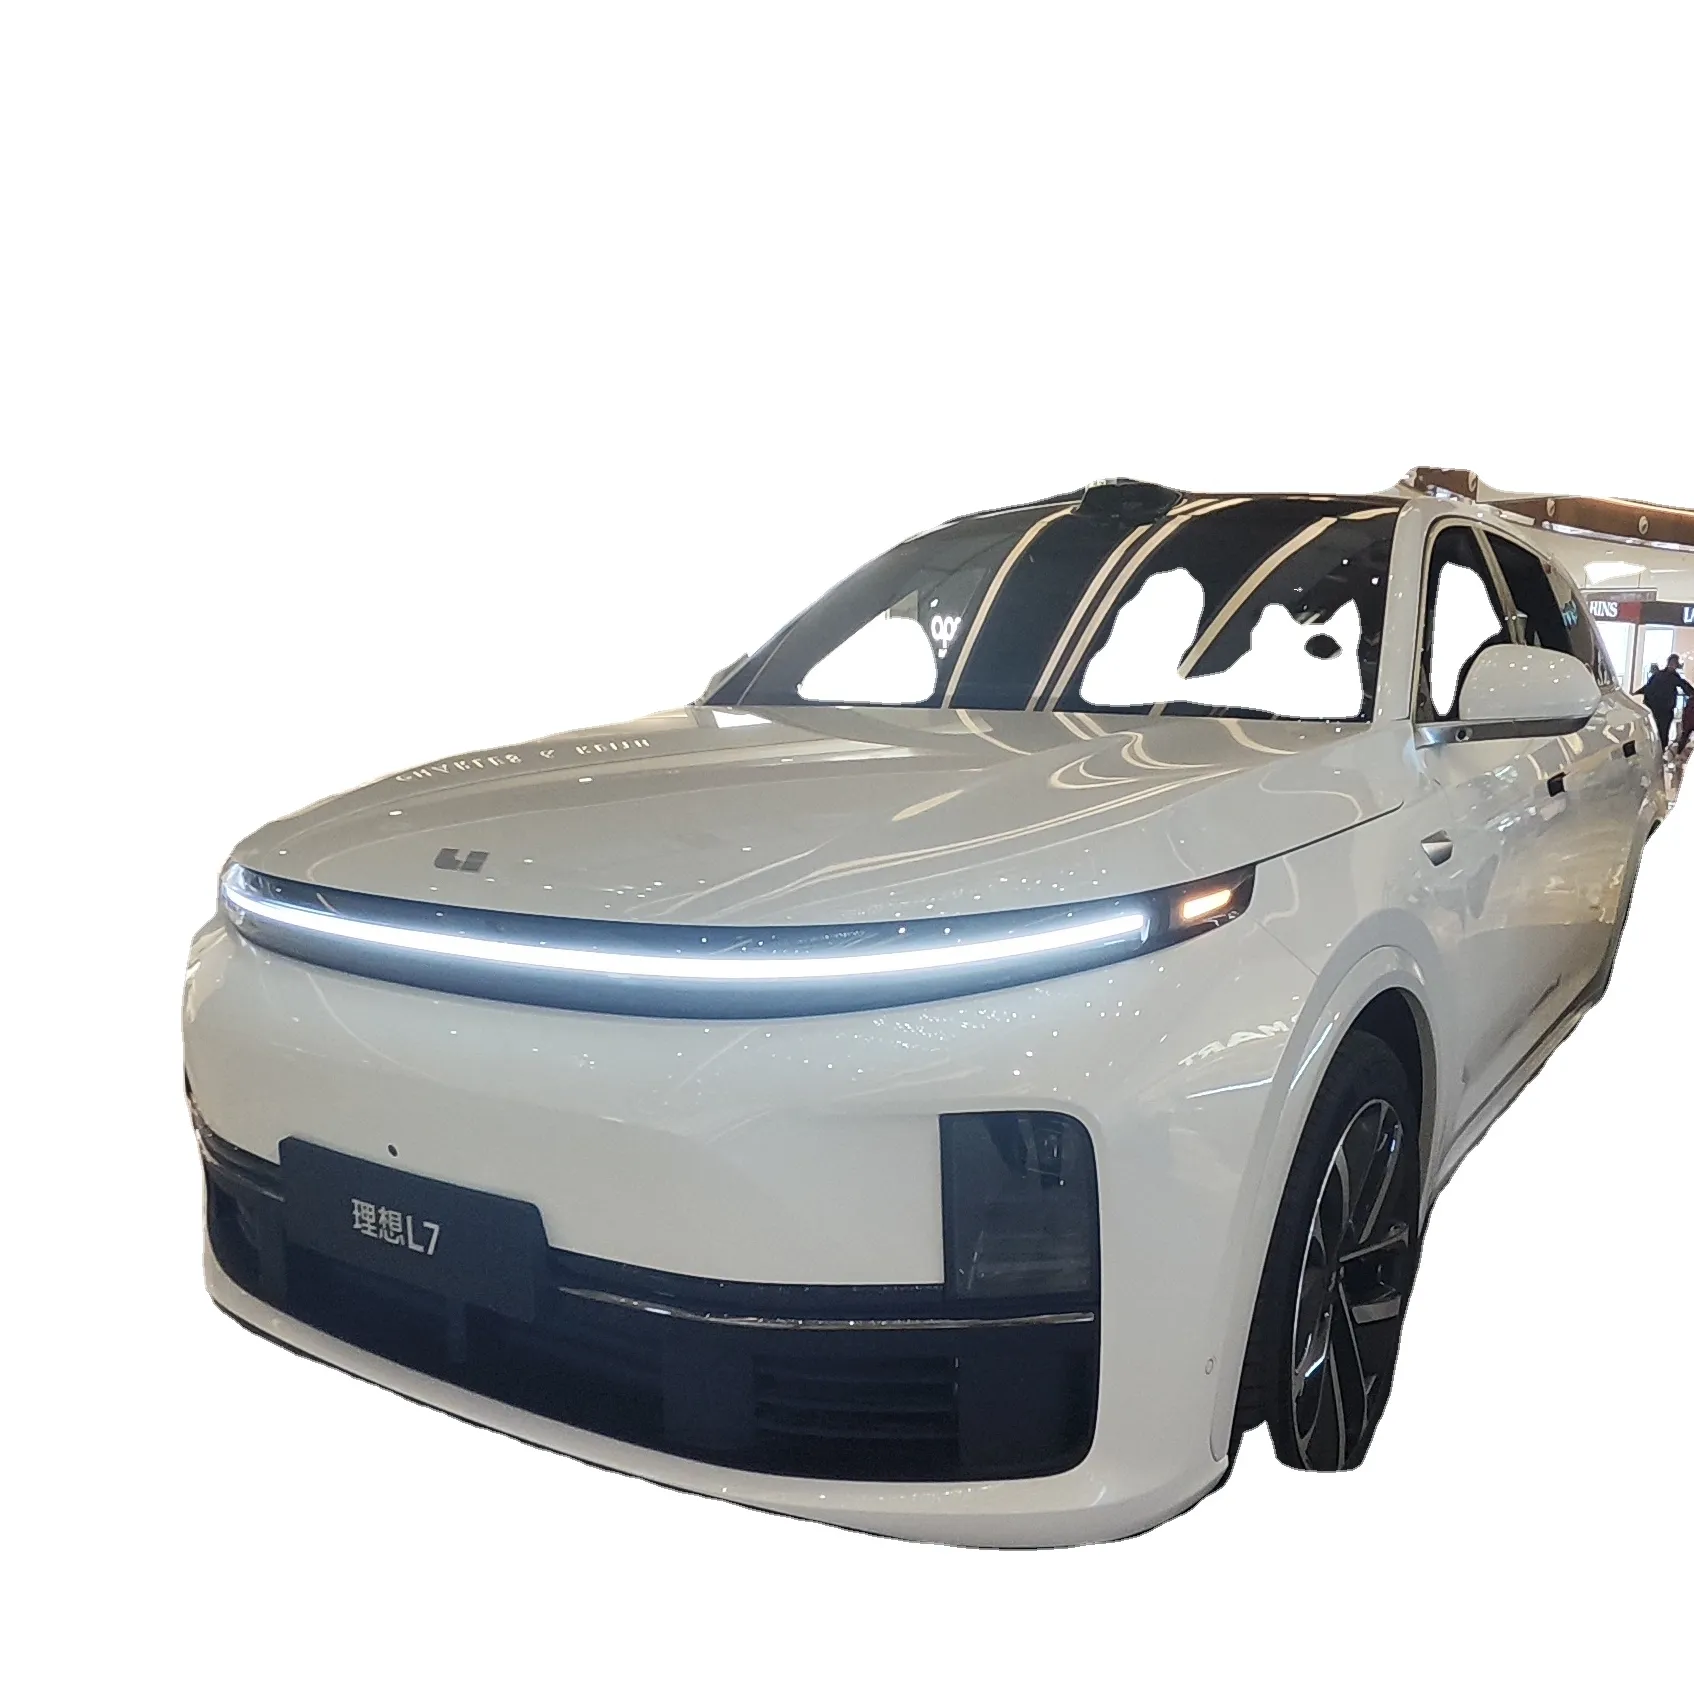 EW 2023 Li L7 ididsize Slecleclecleclectric ybrid coche deportivo de lujo y Premium 5 plazas vehículo moderno inteligente